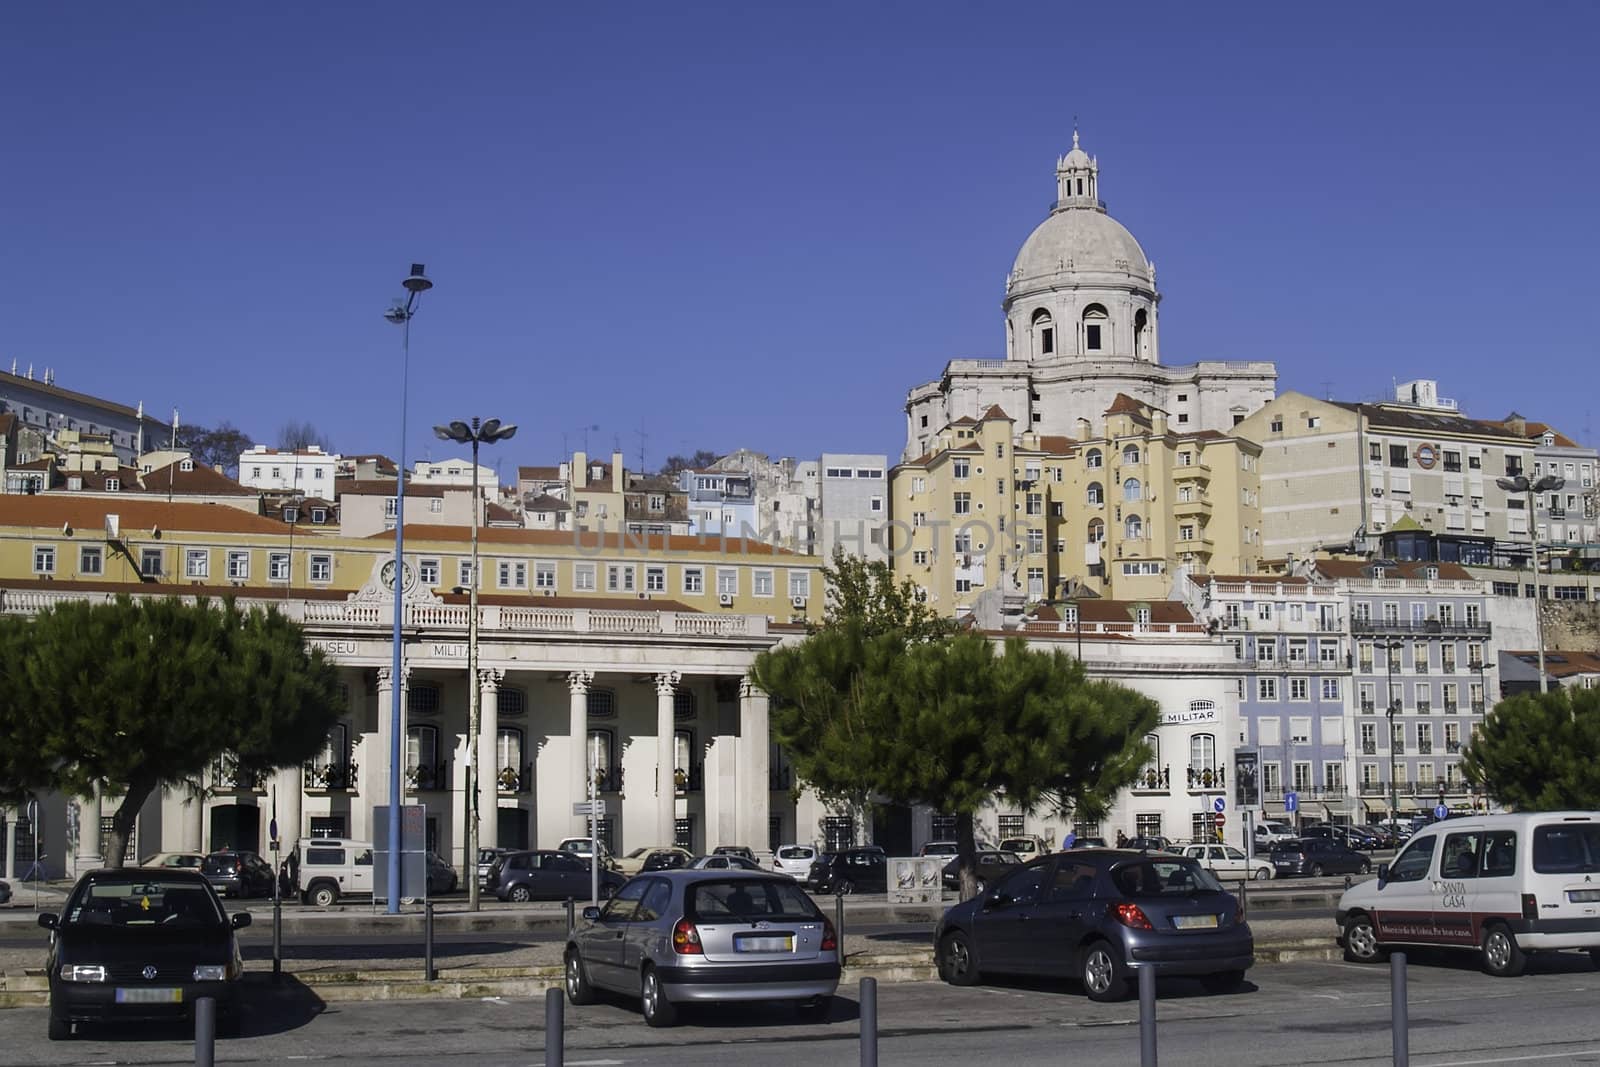 Lisbon cityscape including the National Mausoleum and the Military Museum at Terreiro do Paço